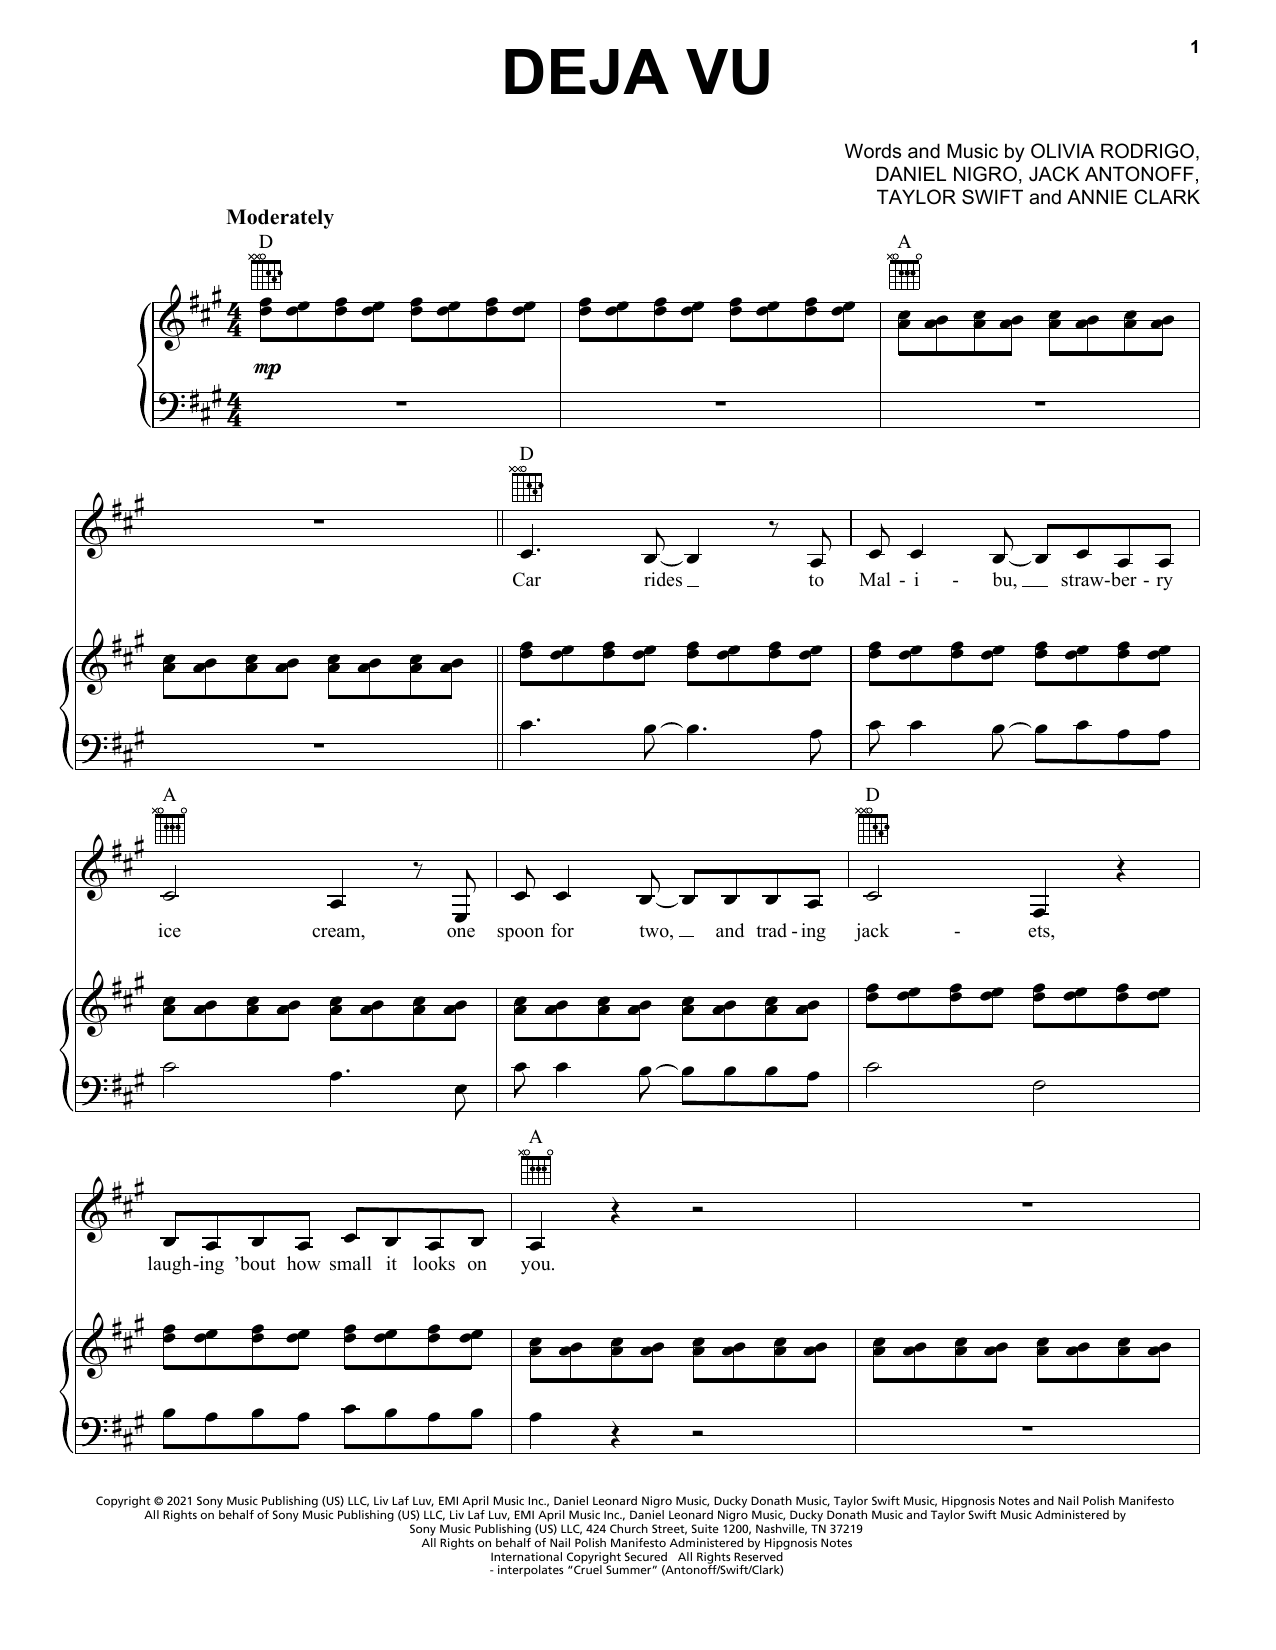 Olivia Rodrigo deja vu Sheet Music Notes & Chords for Piano, Vocal & Guitar (Right-Hand Melody) - Download or Print PDF